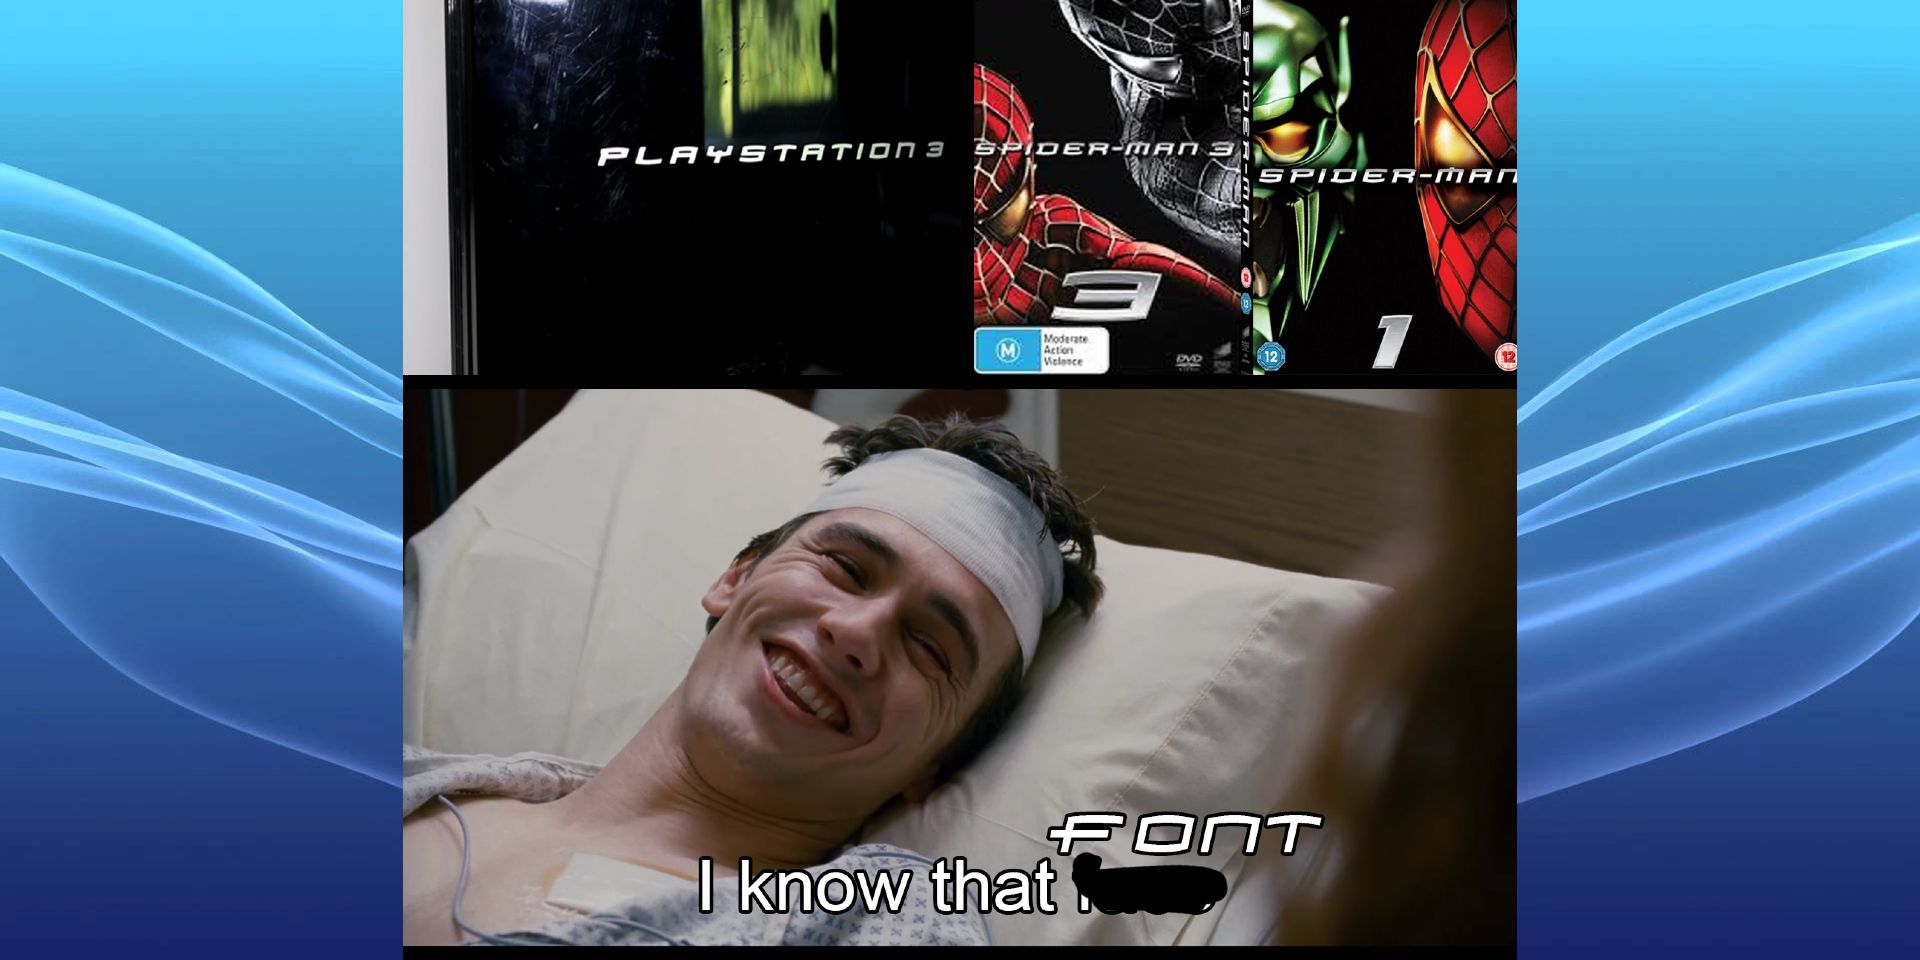 PlayStation 3 Spider-Man meme.